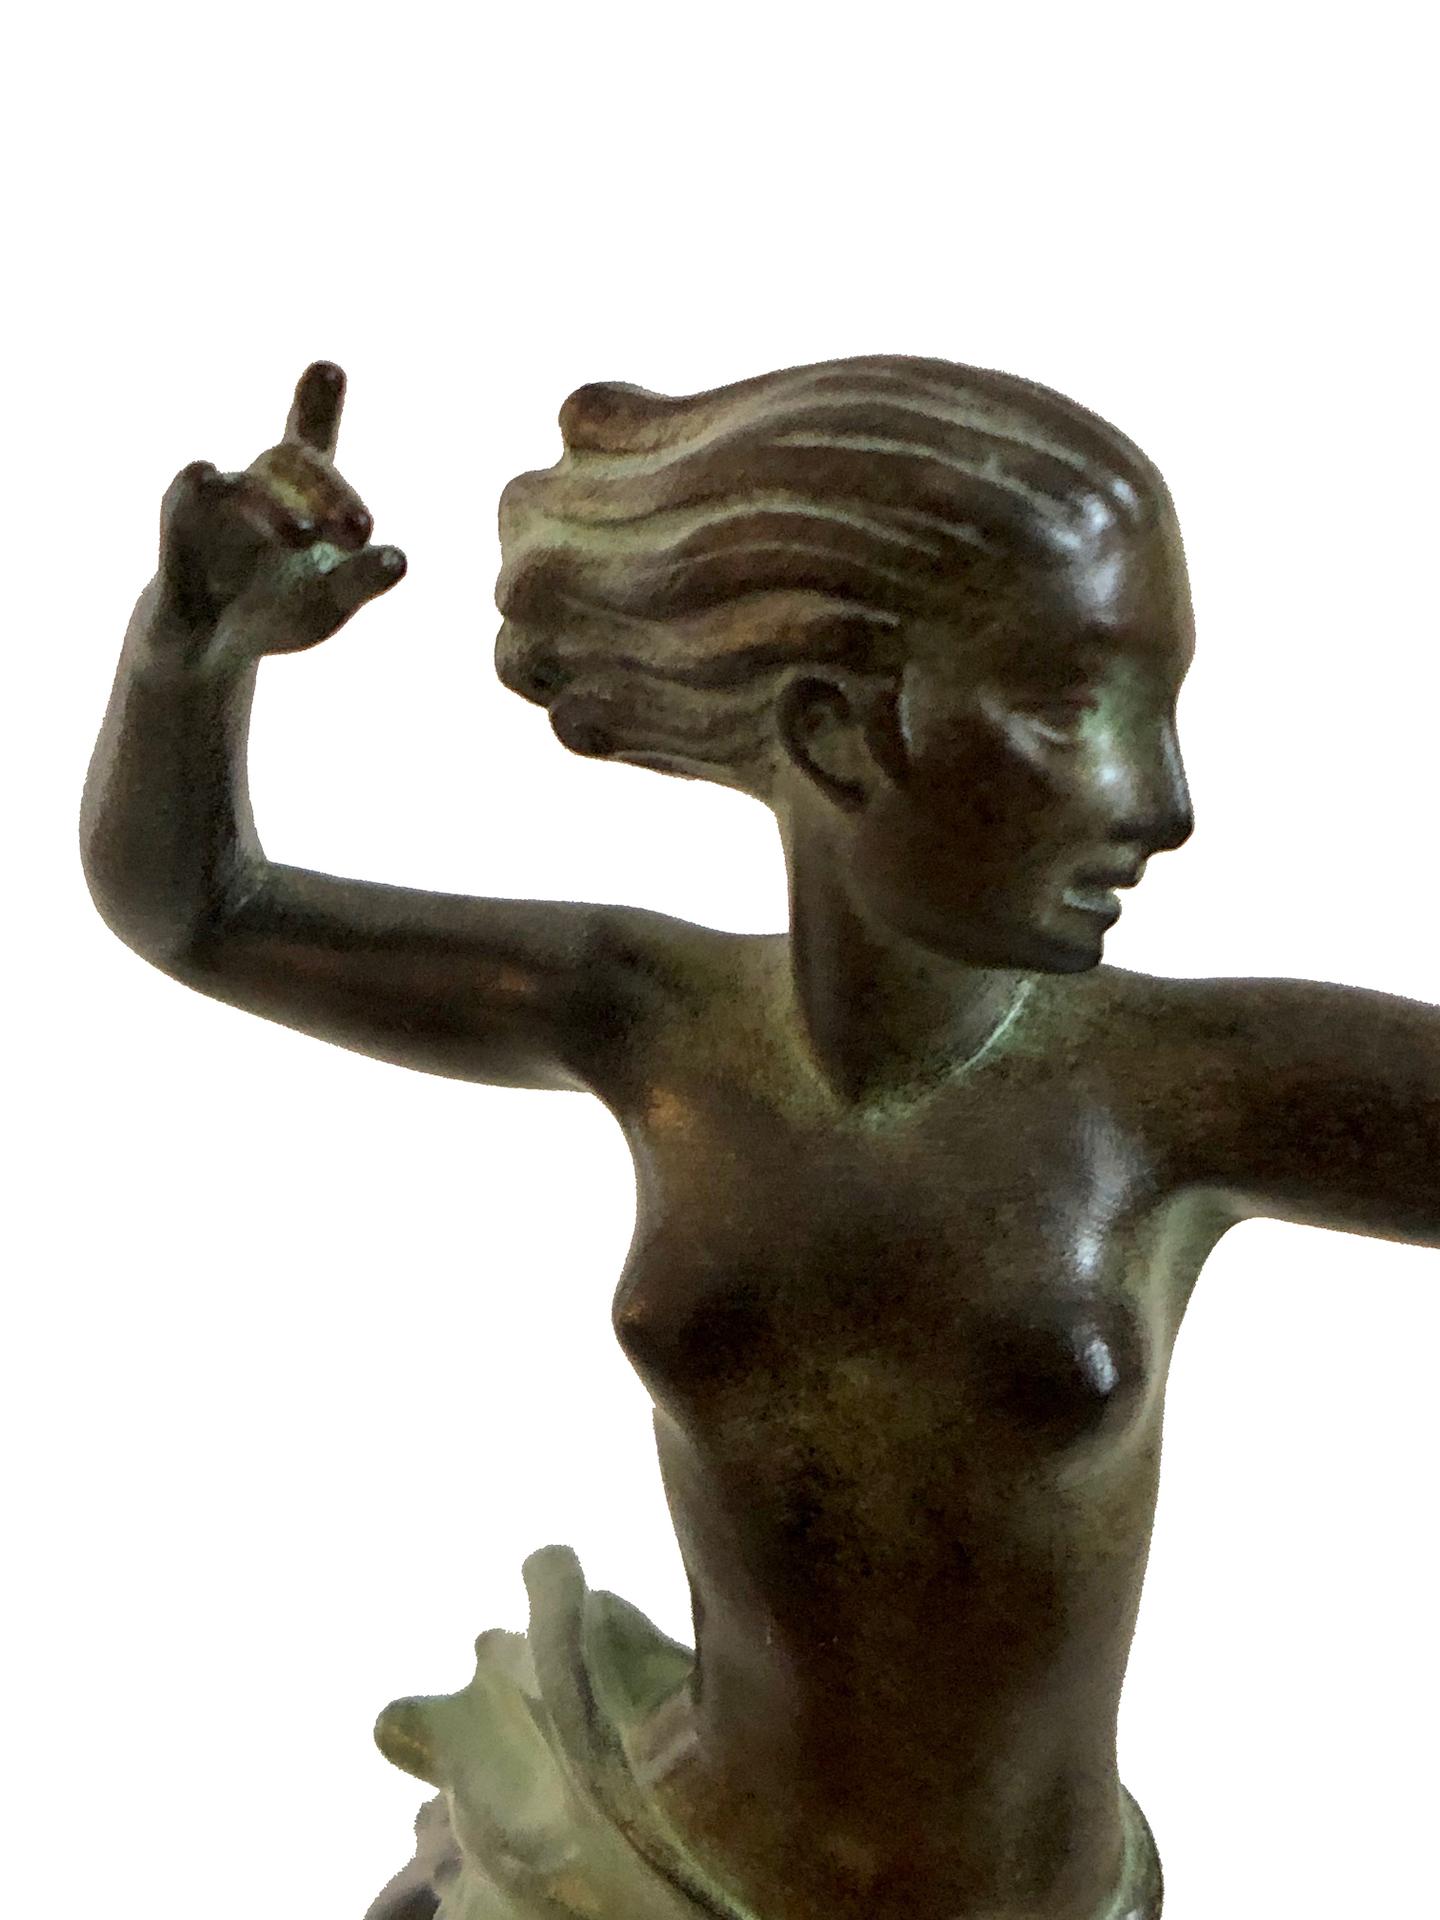 French Art Deco Amazon Sculpture Atalante by Jean de Marco for Max Le Verrier For Sale 3